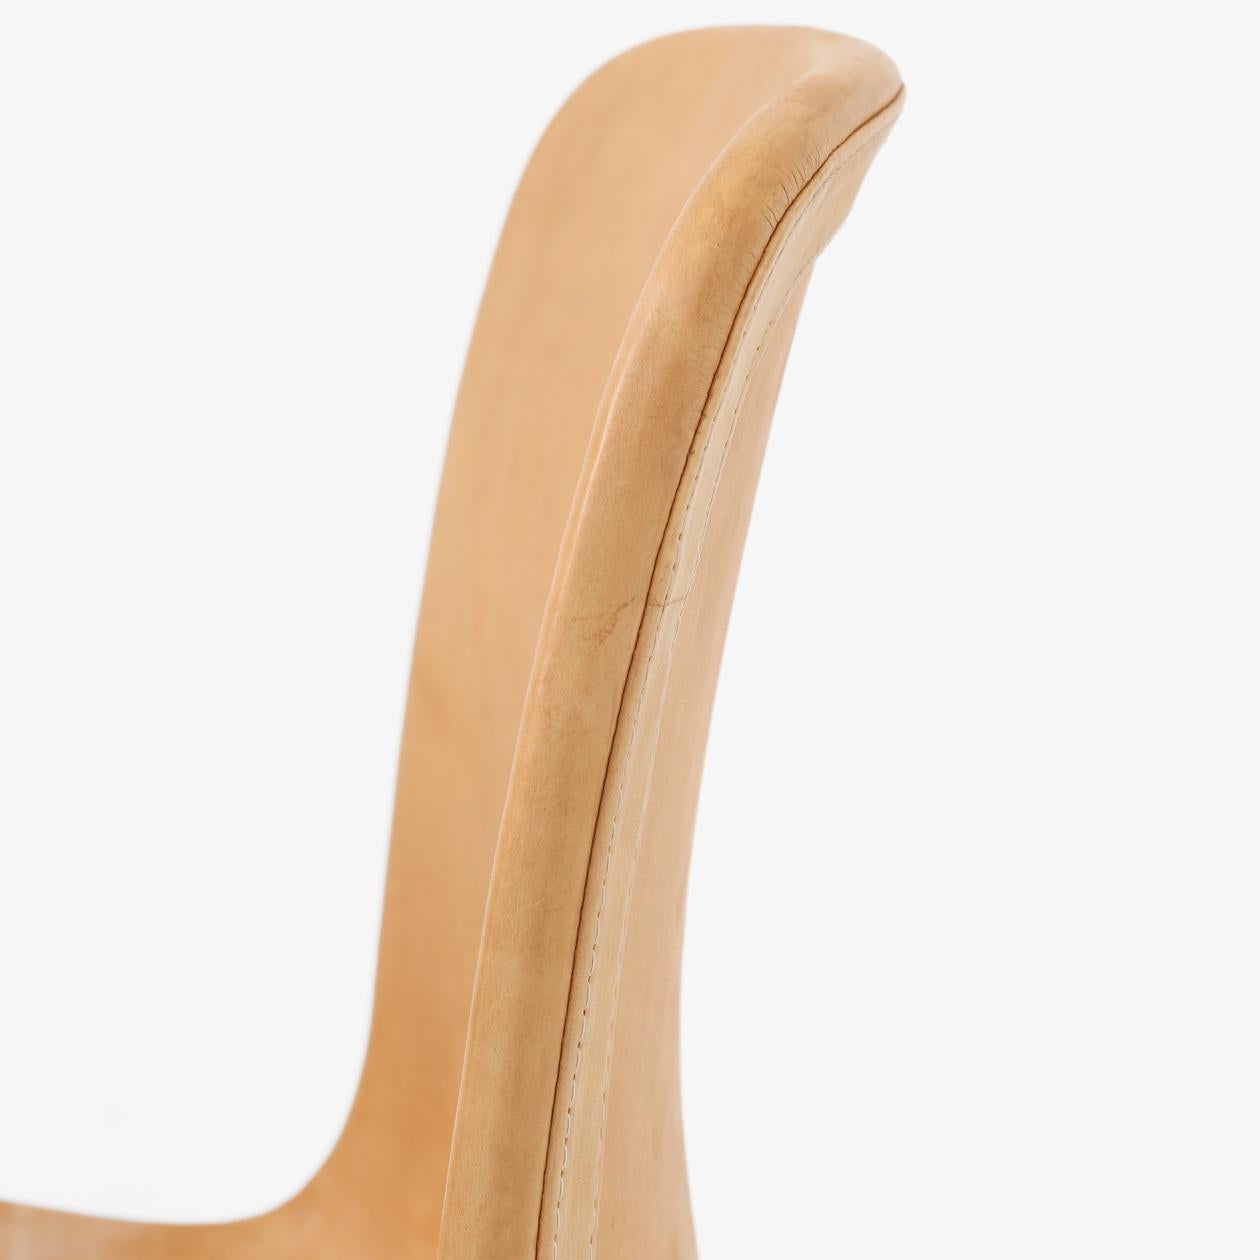 Tulip Chair by Poul Kjærholm 1